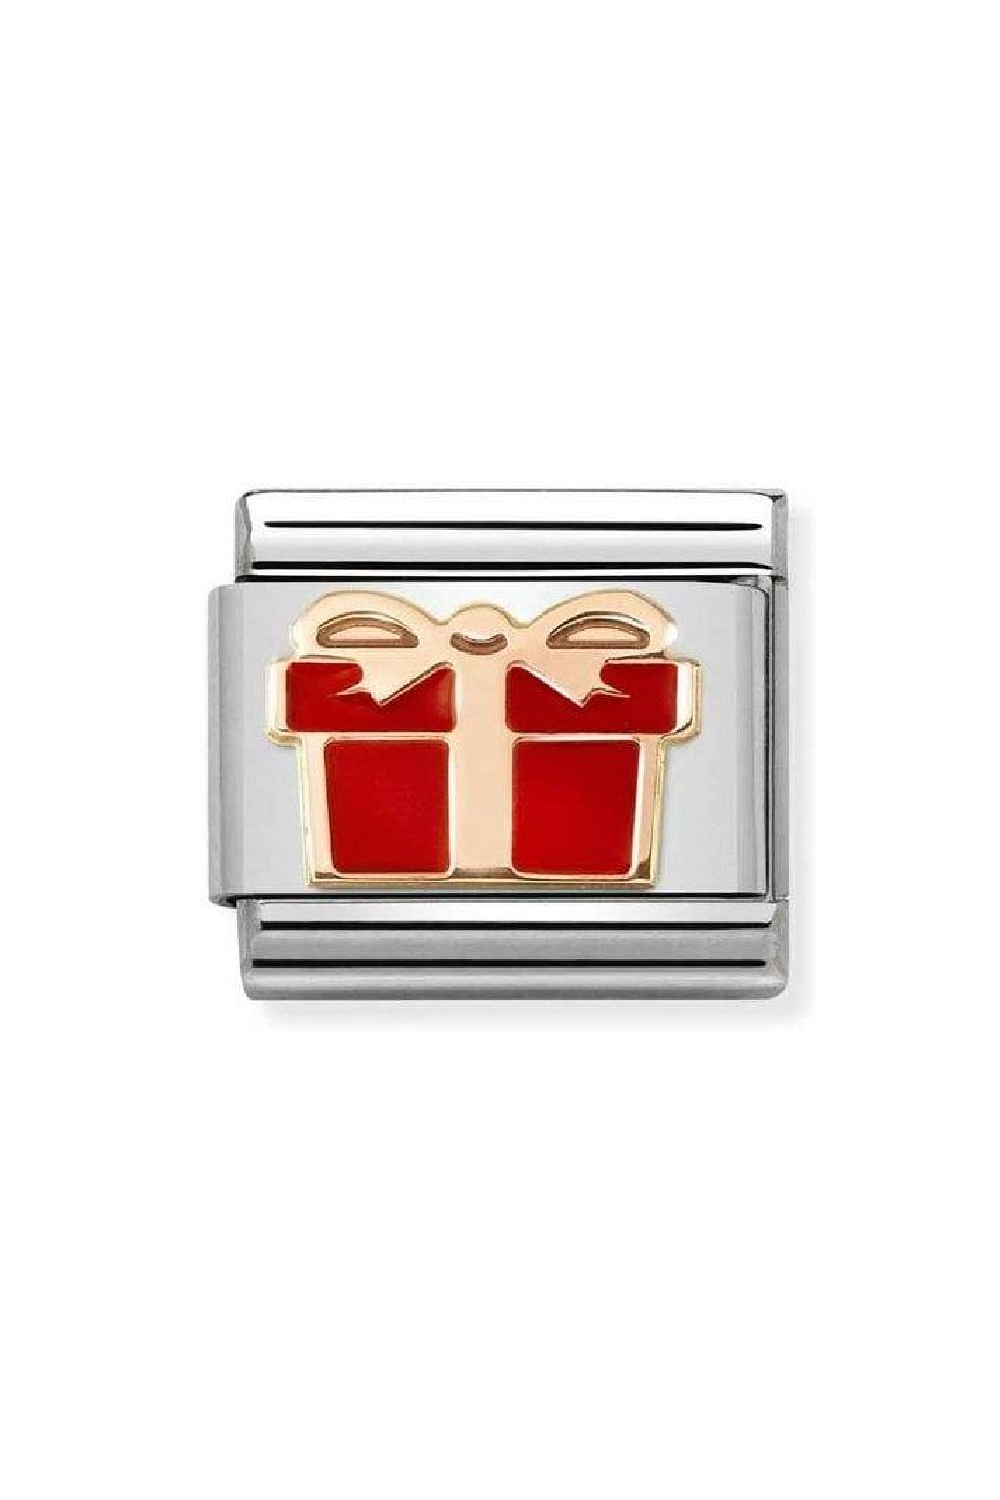 Symbols 9k Rose gold & enamel Gift Box Red